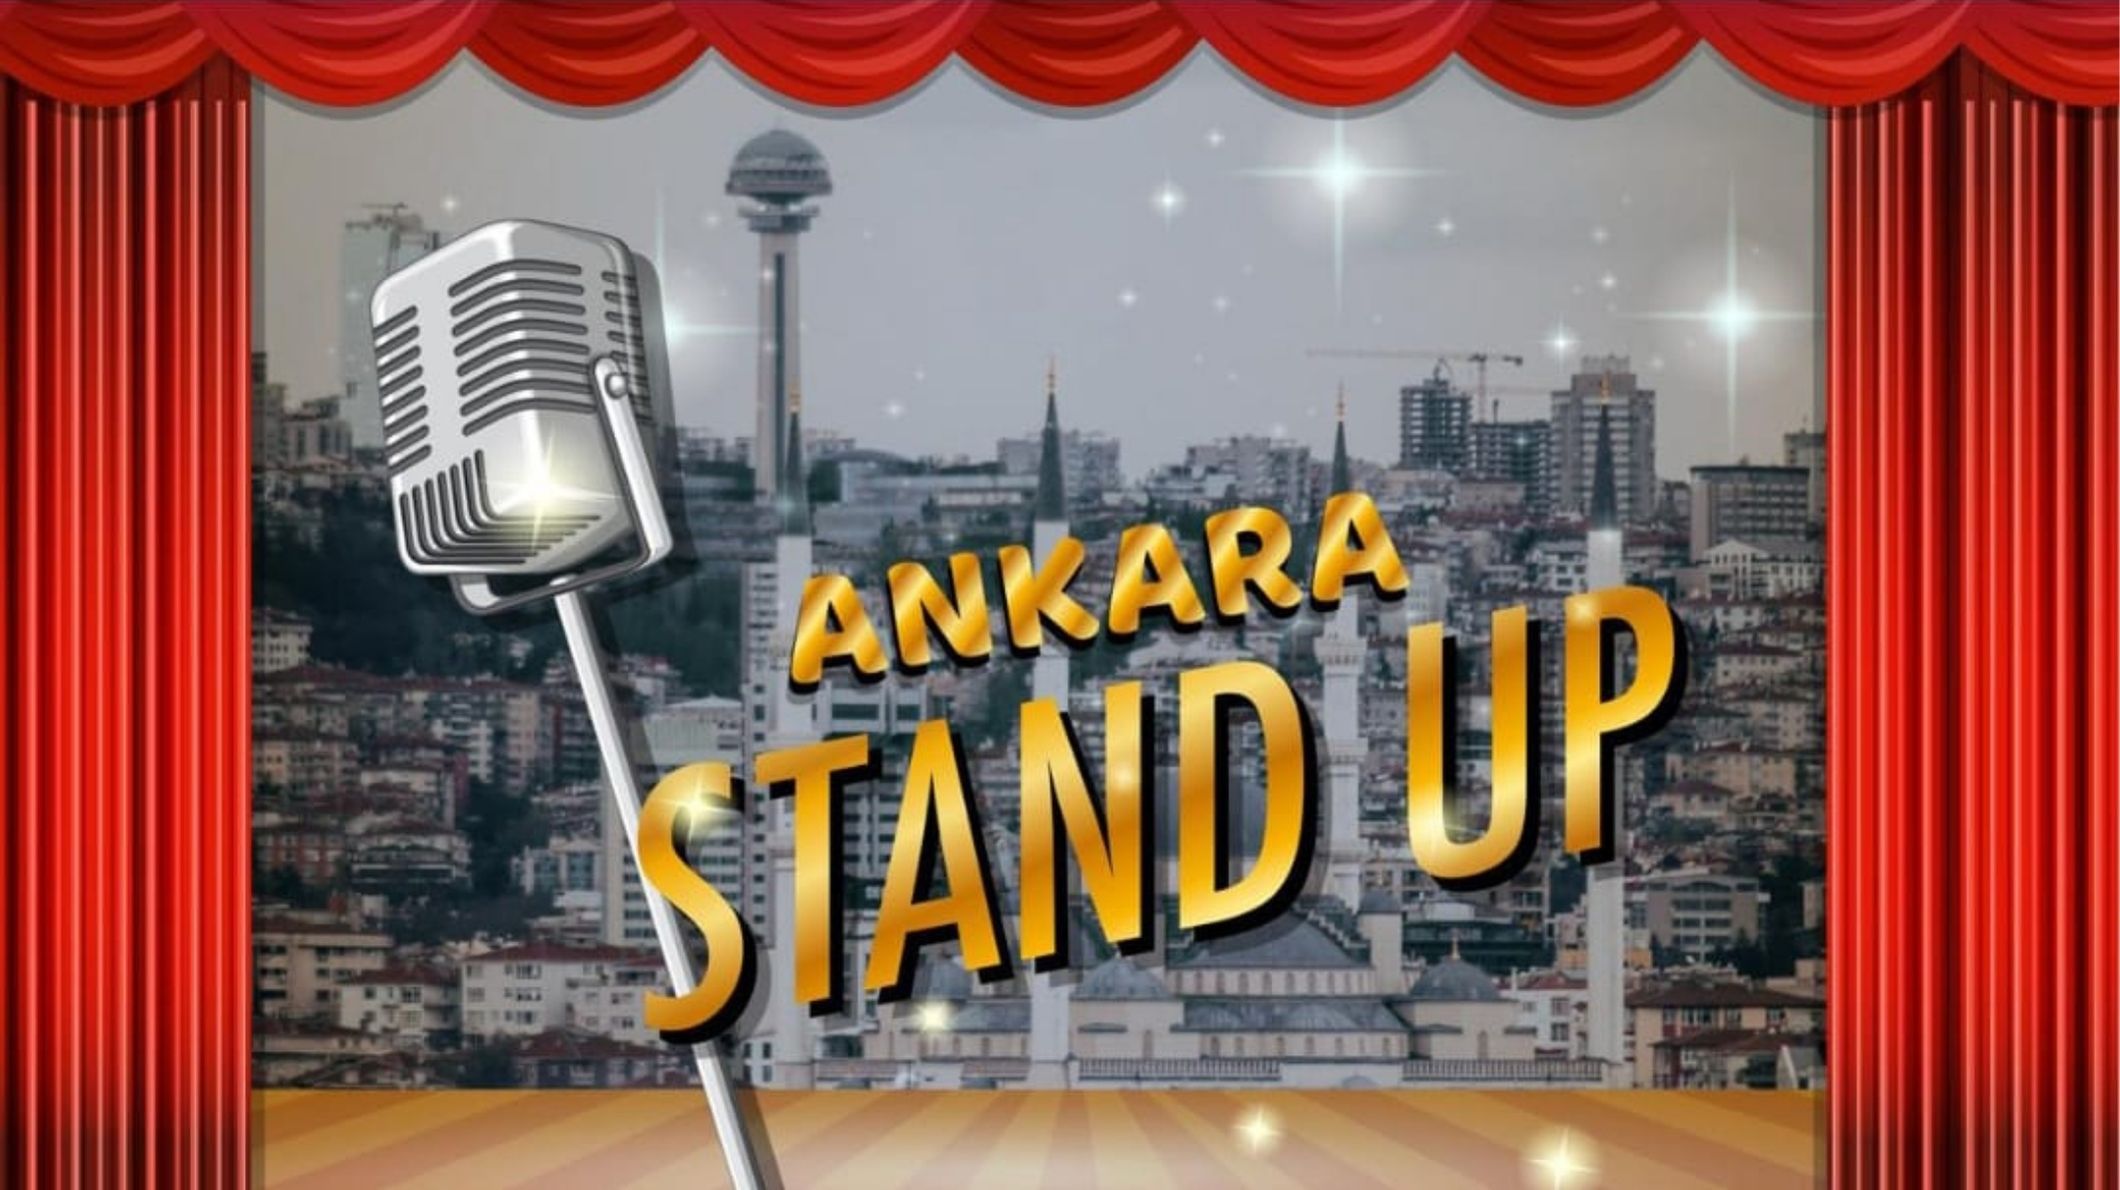 Ankara Stand Up Gecesi - Berlin Pub - Ankara